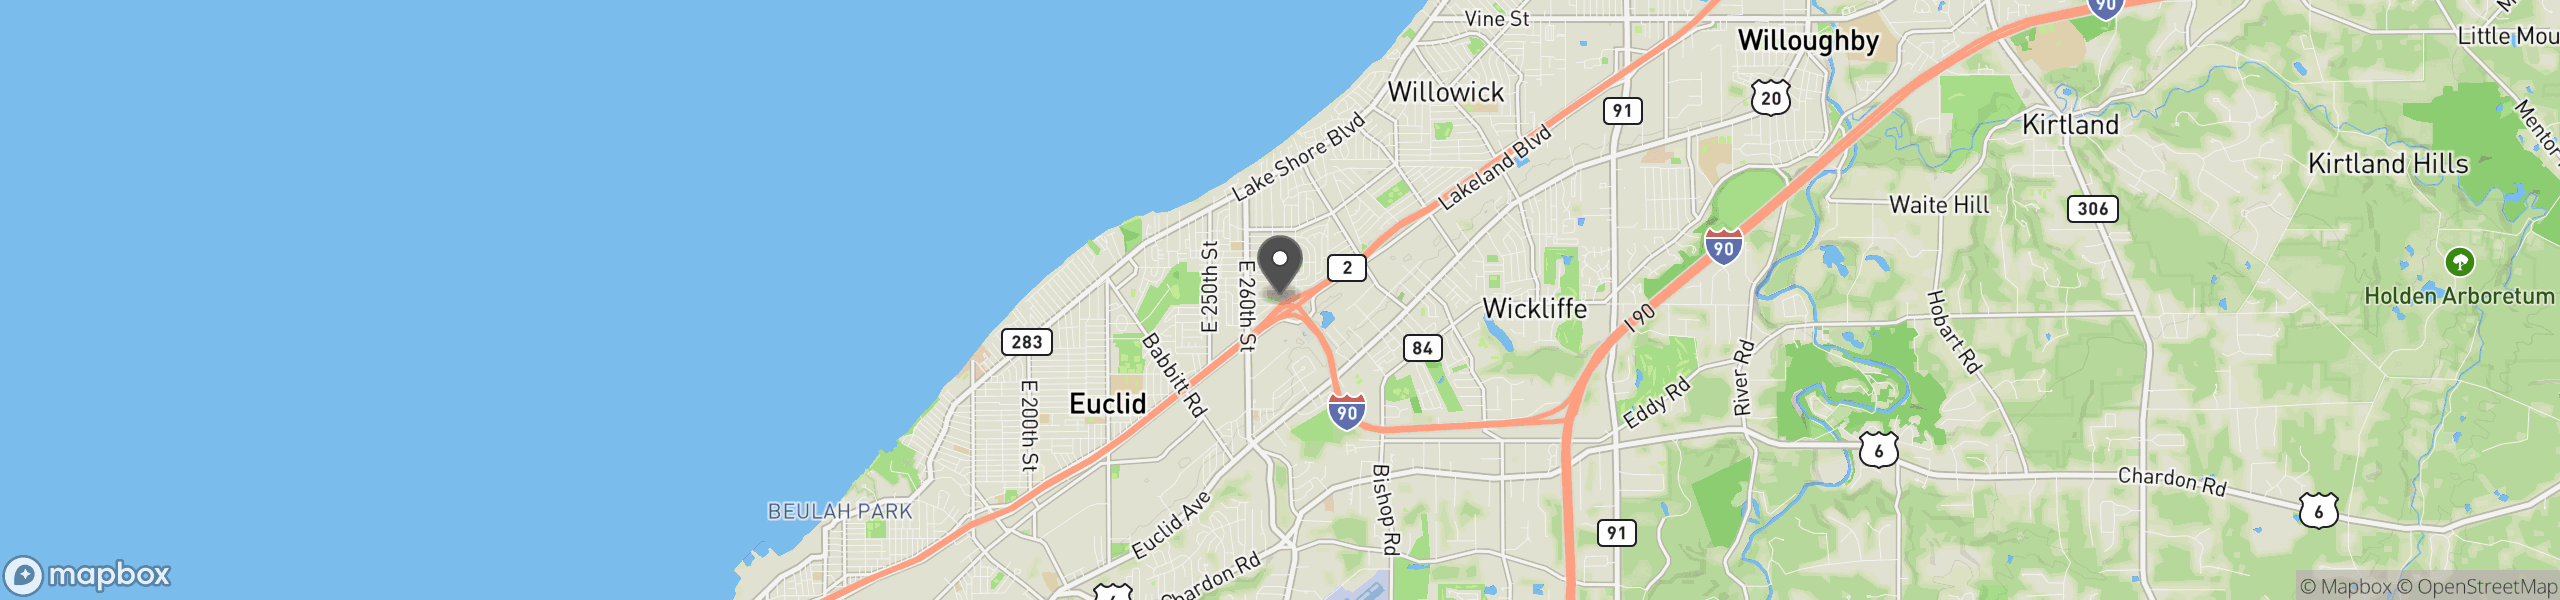 Euclid, OH 44132